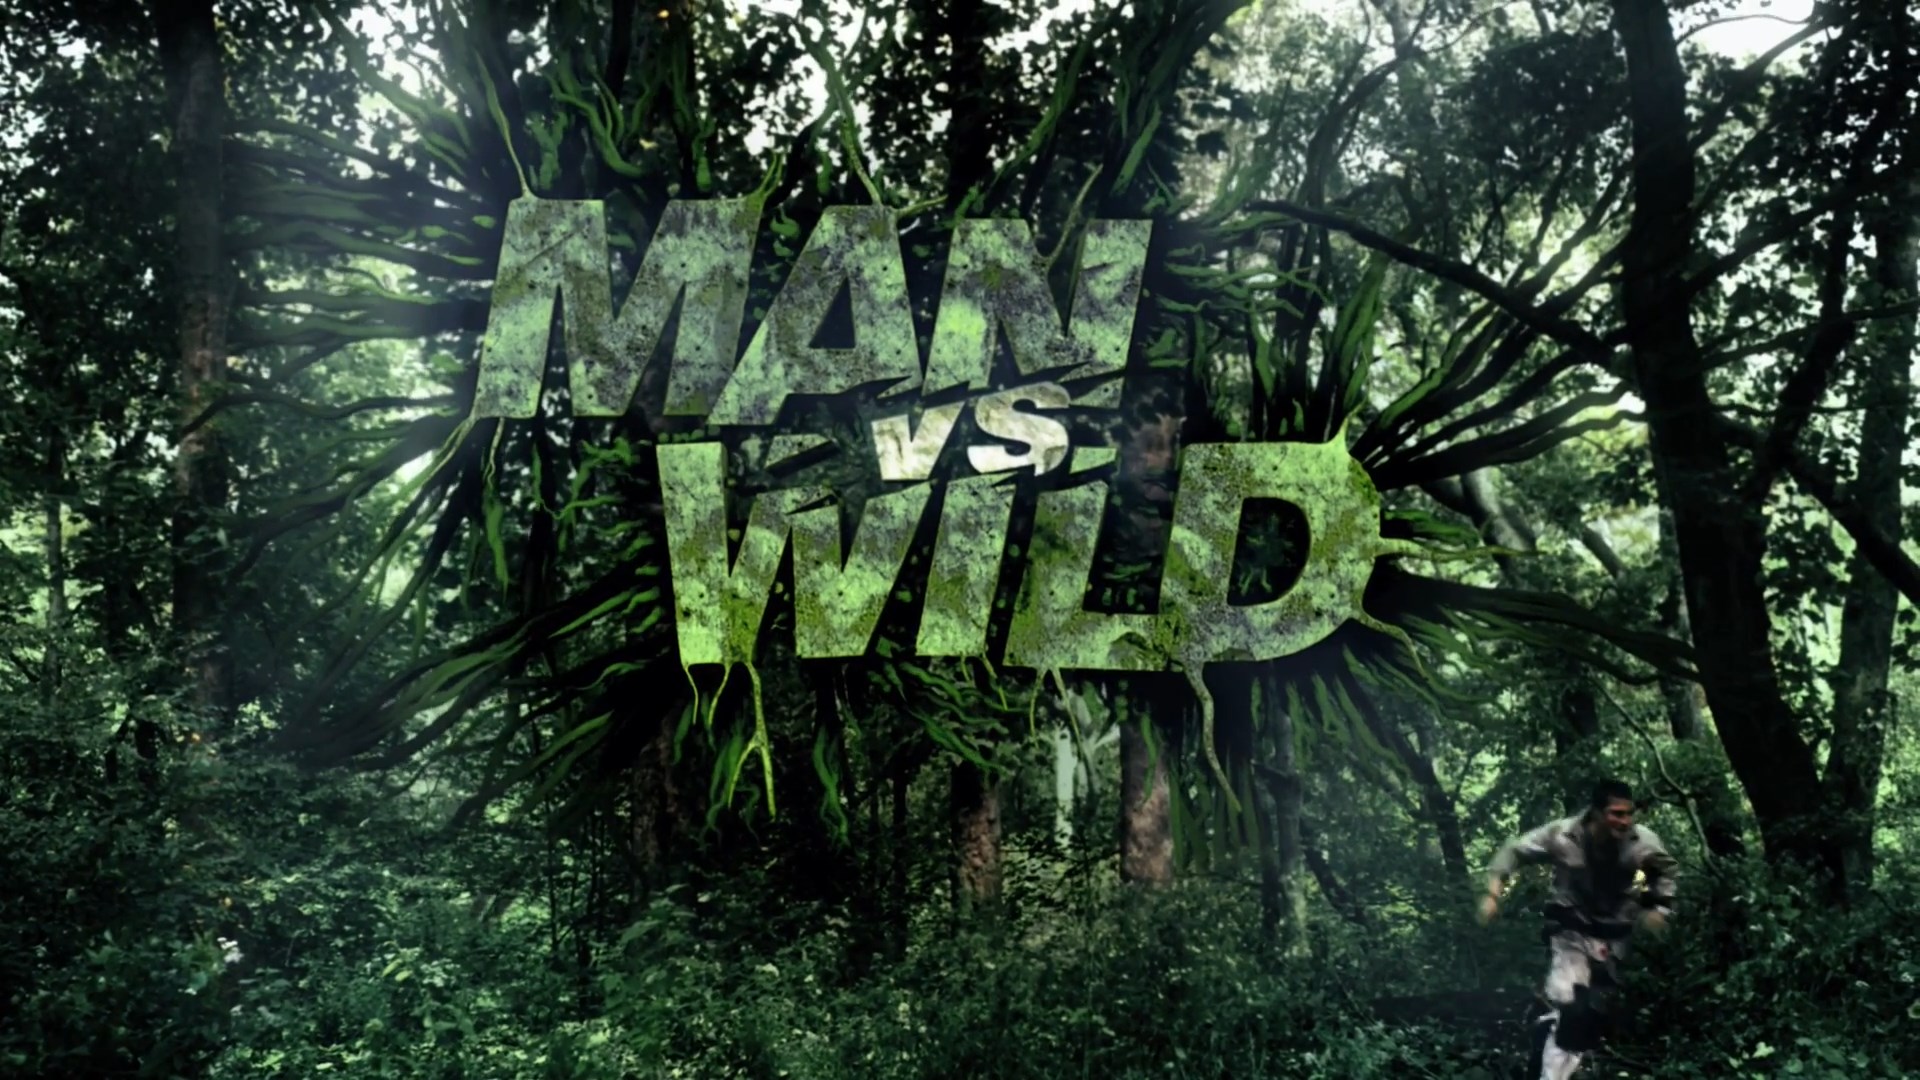 Man Vs Wild VFX artist